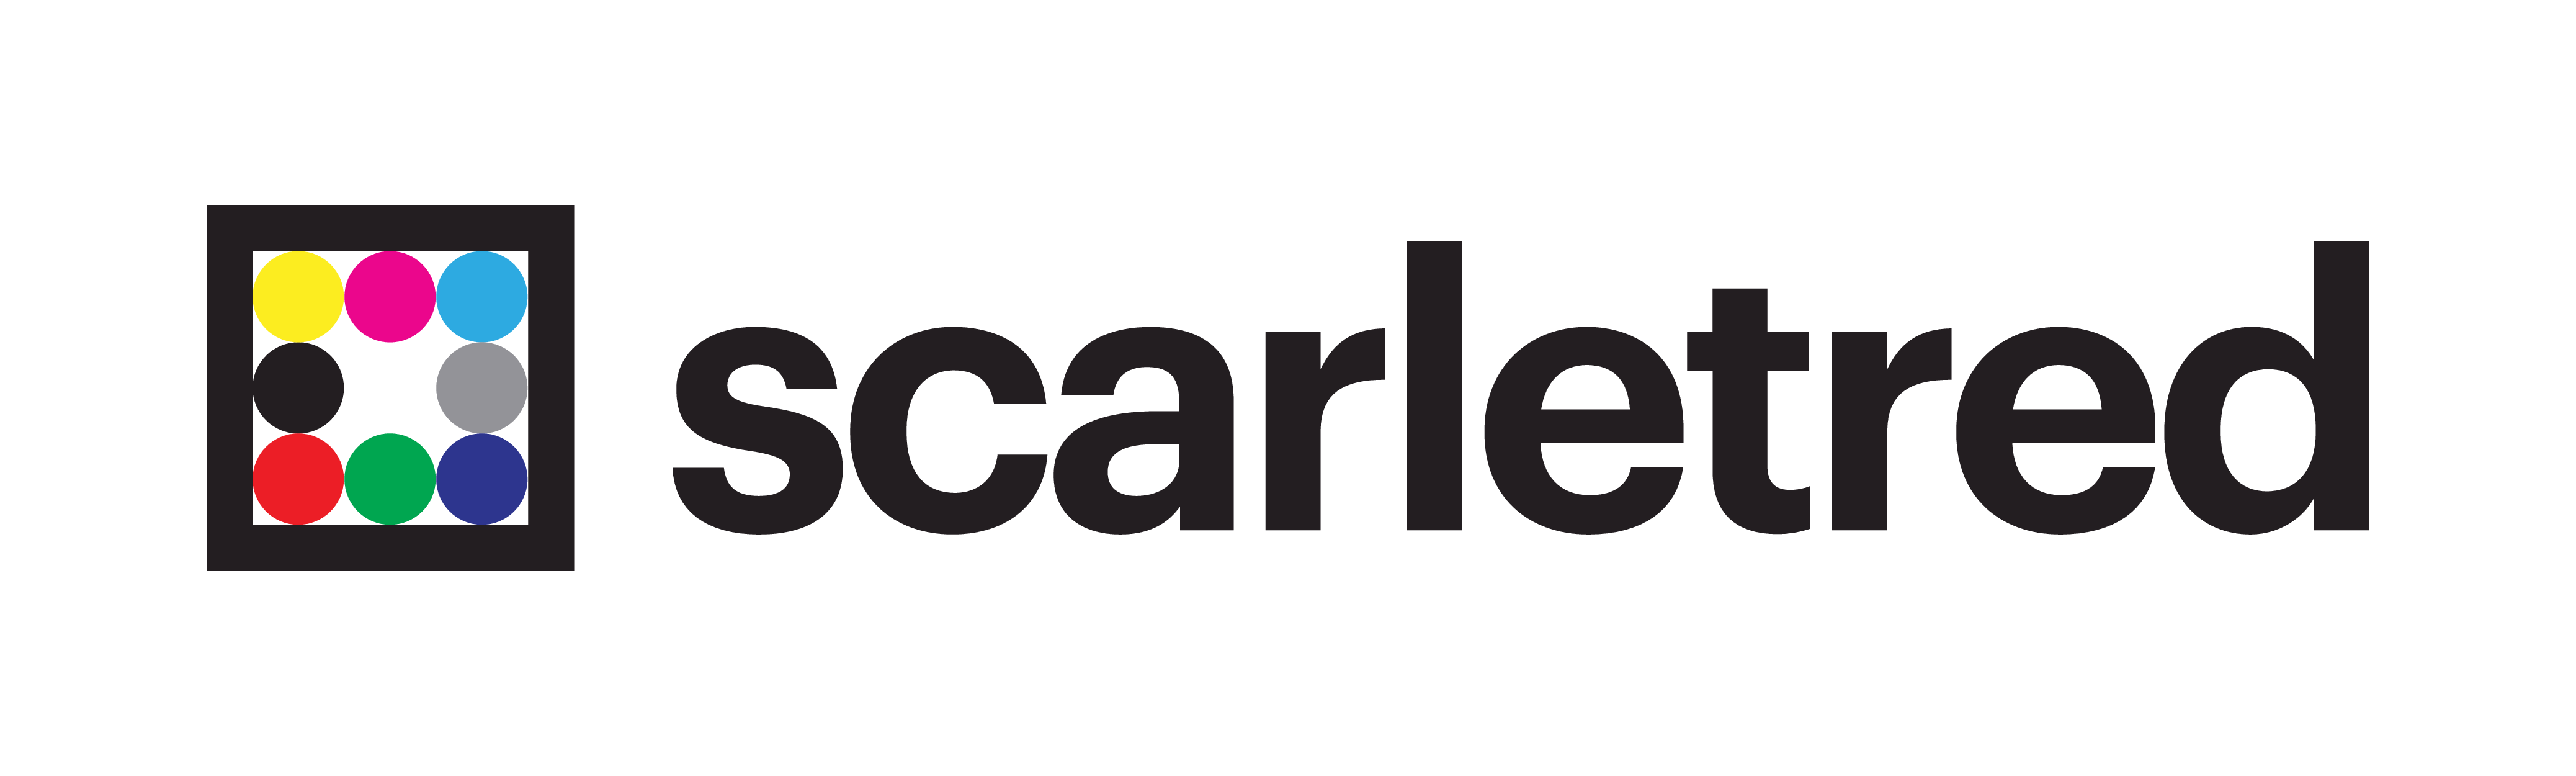 SCARLETRED_Logo_black_vector